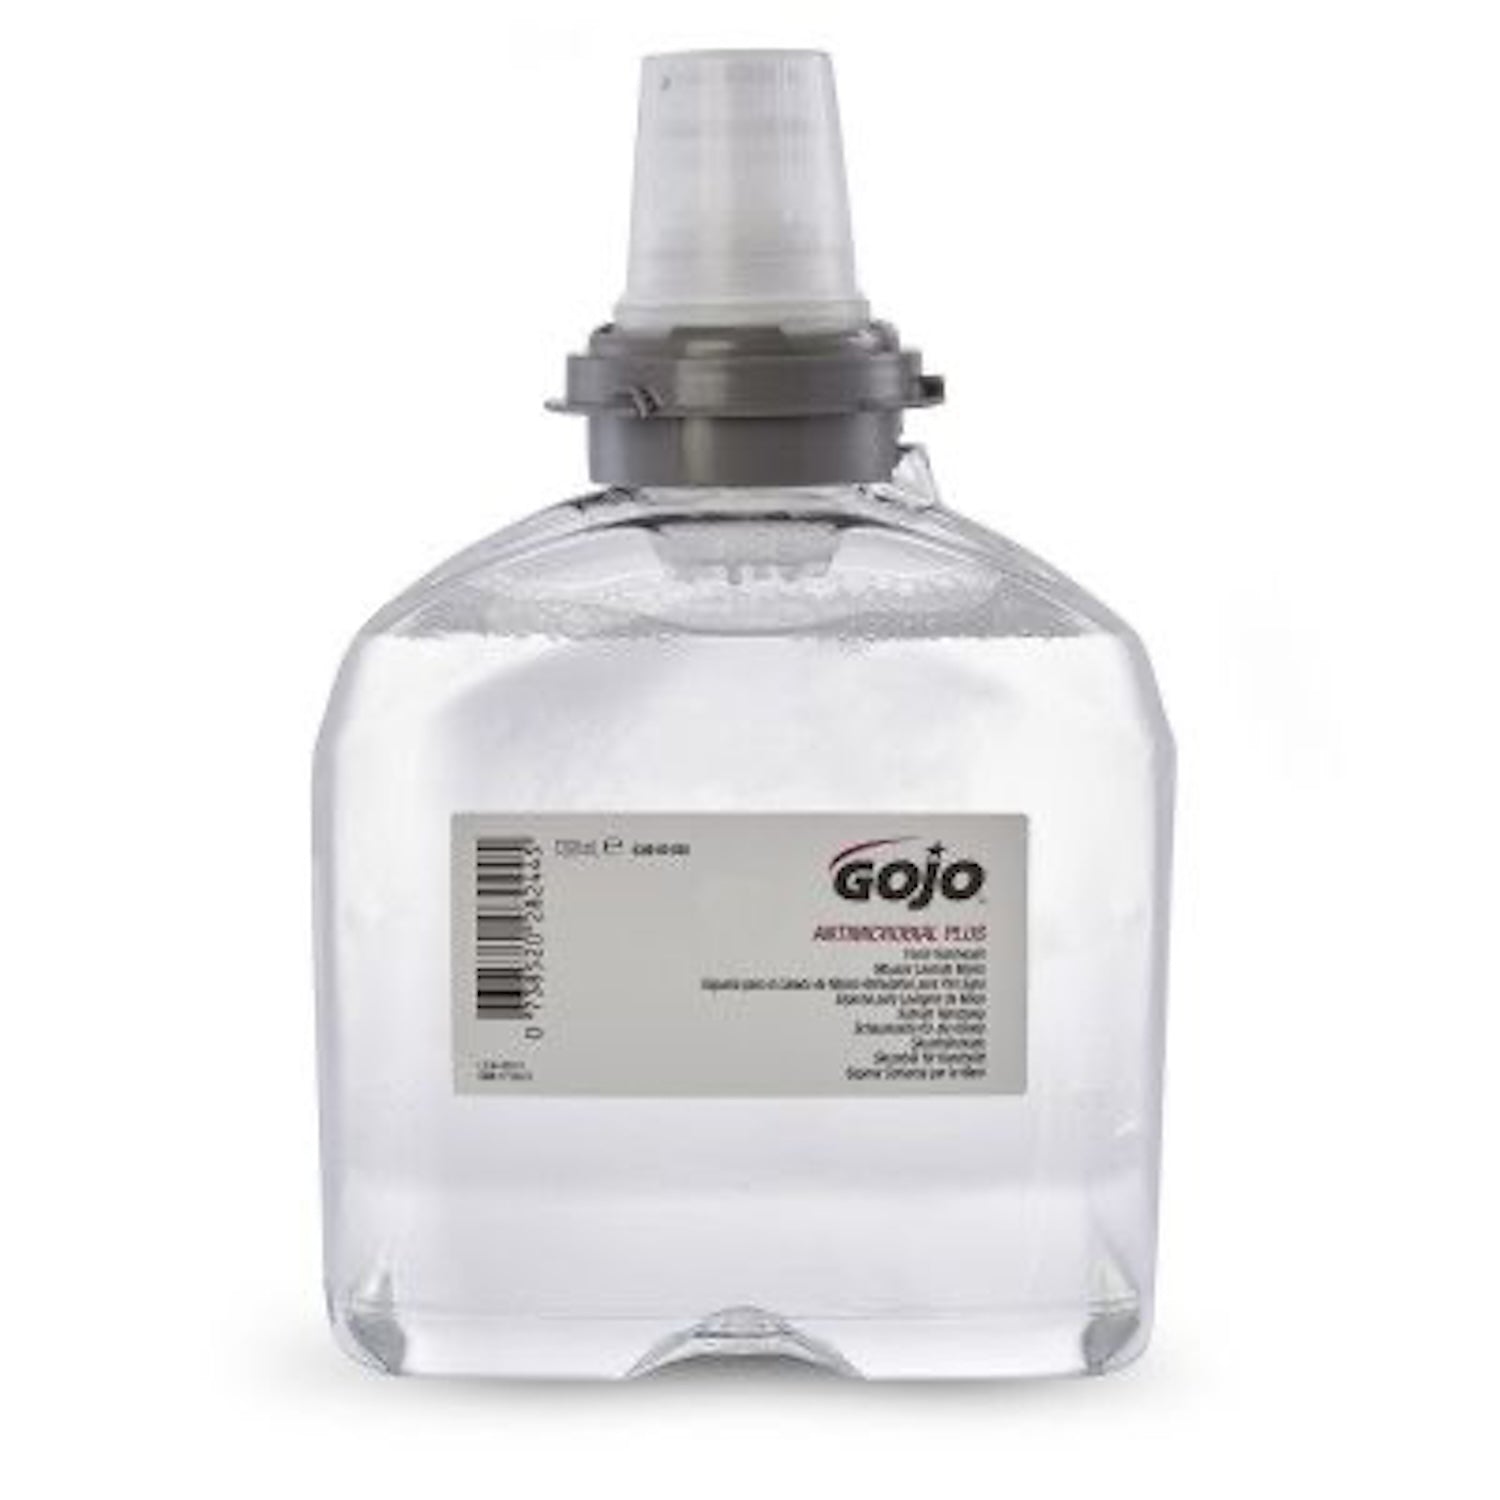 GOJO Antimicrobial Plus Foam Handwash TFX | 1200ml | Single